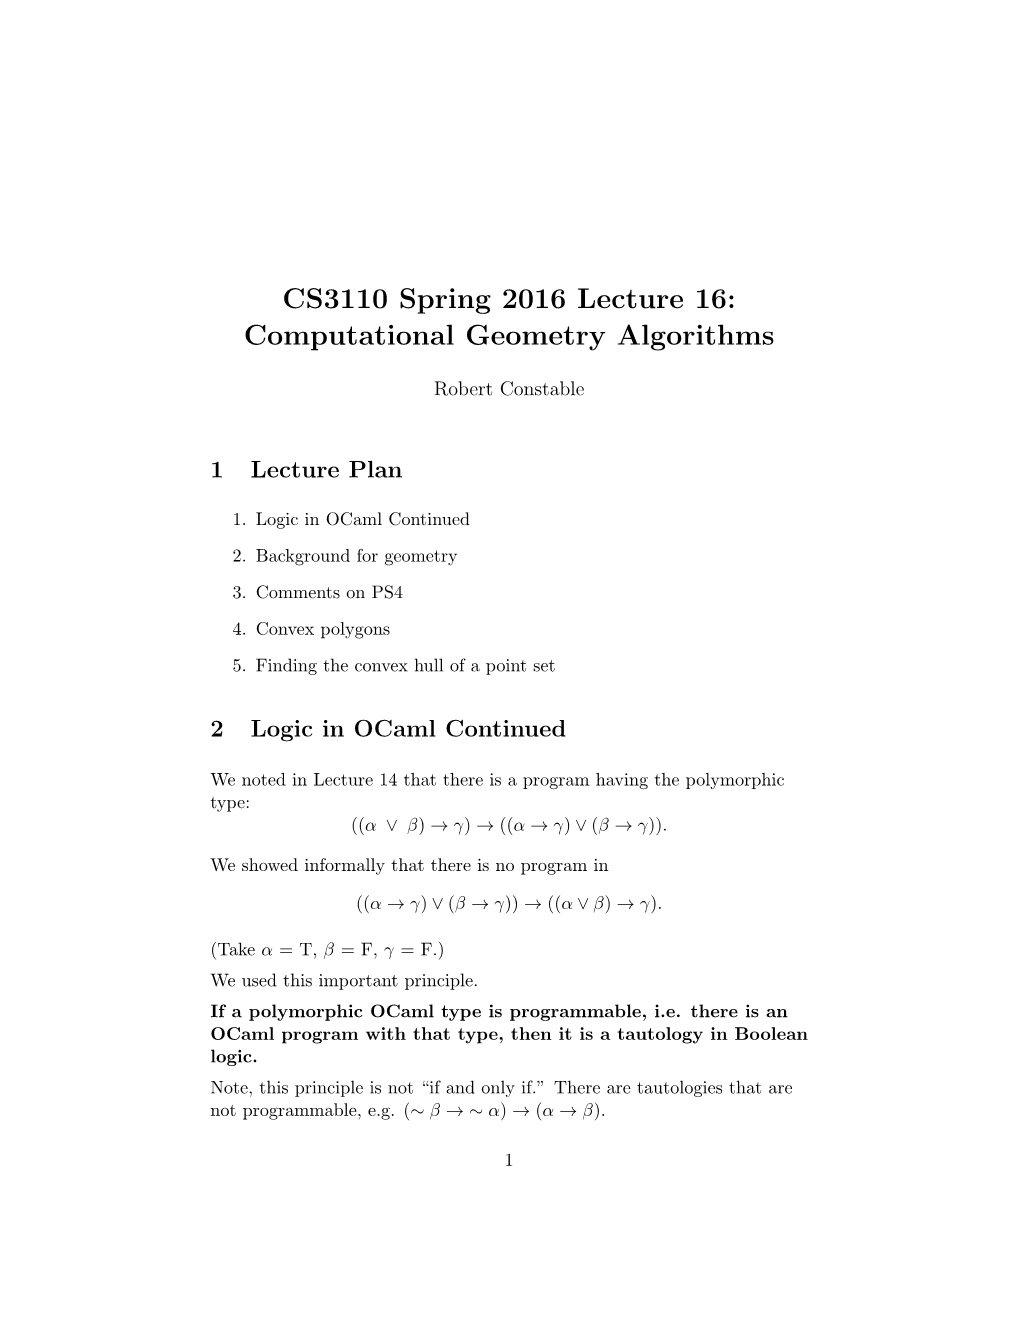 CS3110 Spring 2016 Lecture 16: Computational Geometry Algorithms